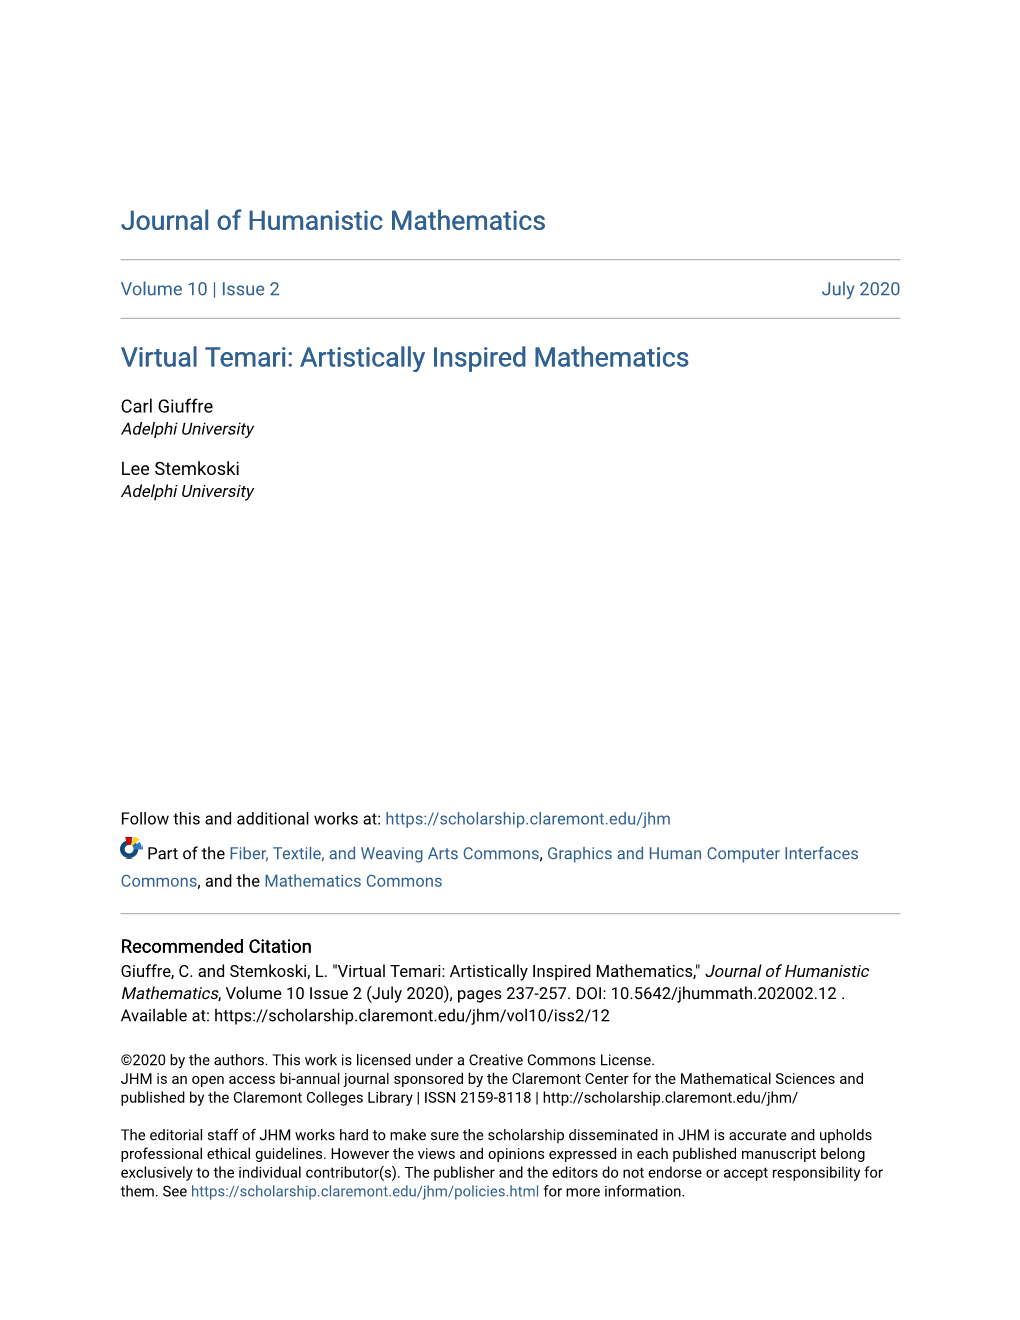 Virtual Temari: Artistically Inspired Mathematics